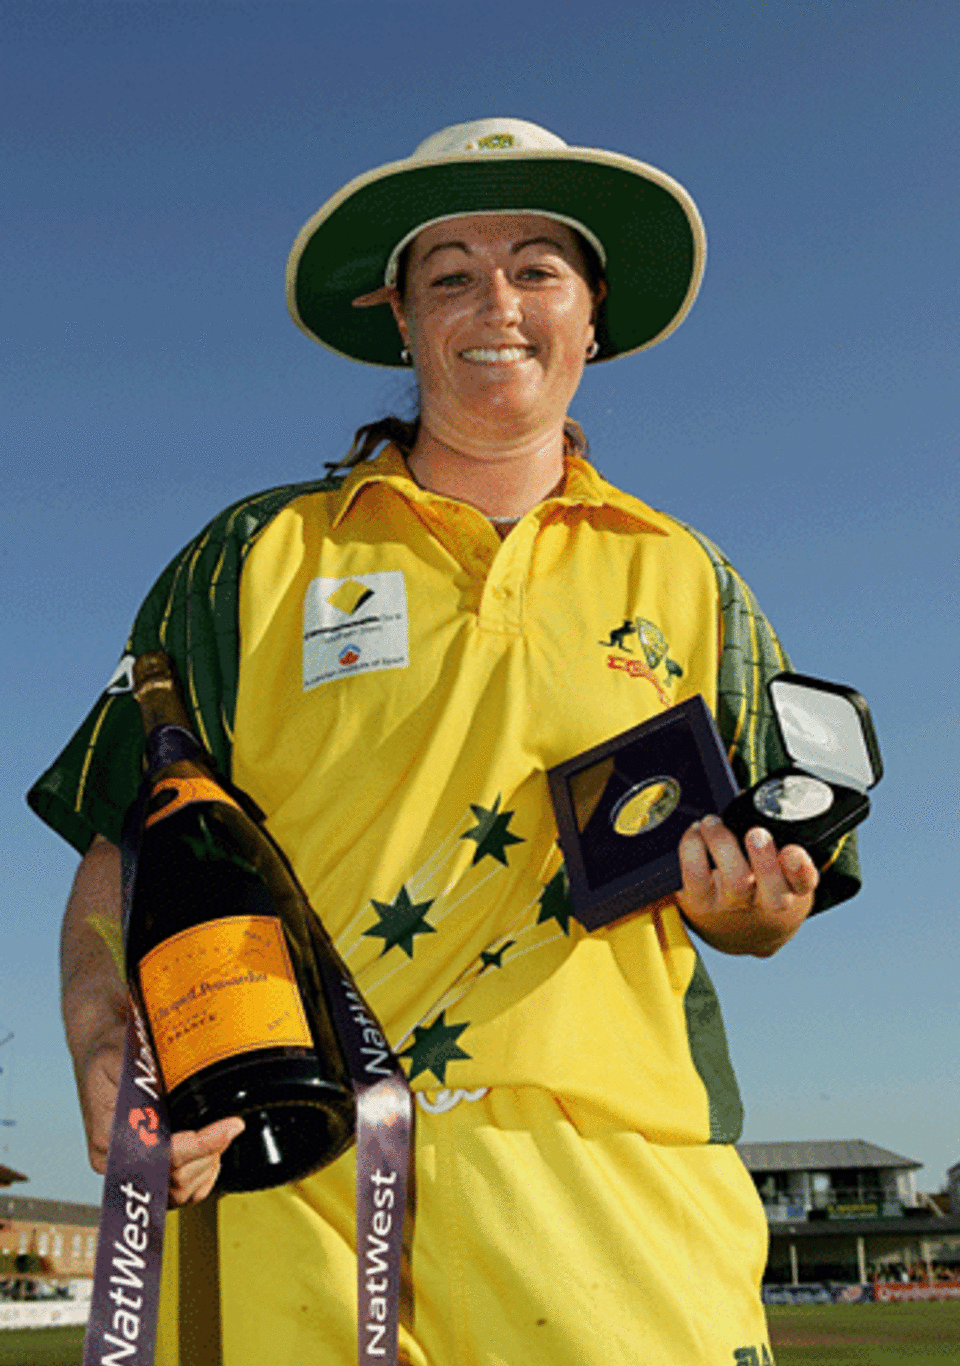 Karen Rolton, posing with her 'man of the match' award, England Women v Australia Women, County Ground, Taunton, September 2, 2005